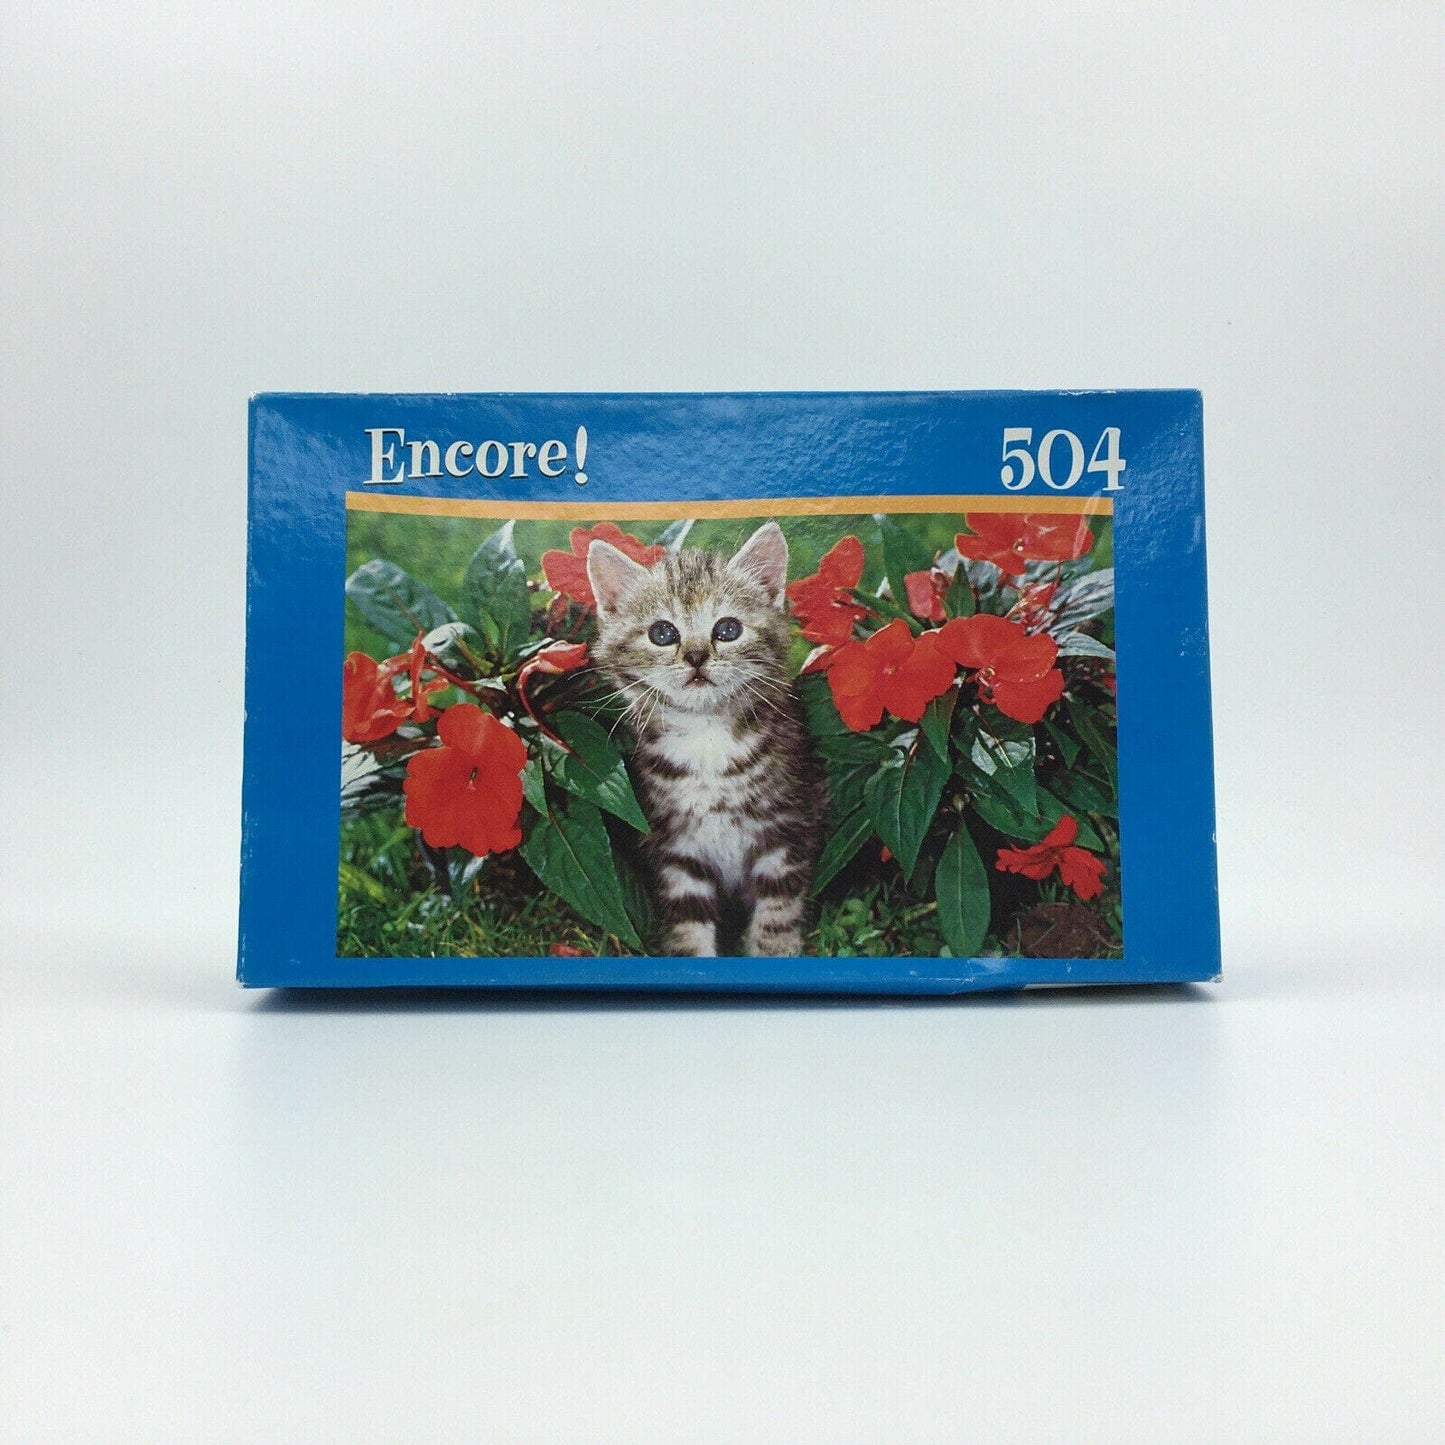 NEW Encore! “Kitten With Stripes” 504 Piece Jigsaw Puzzle 2010 #100270 NIB